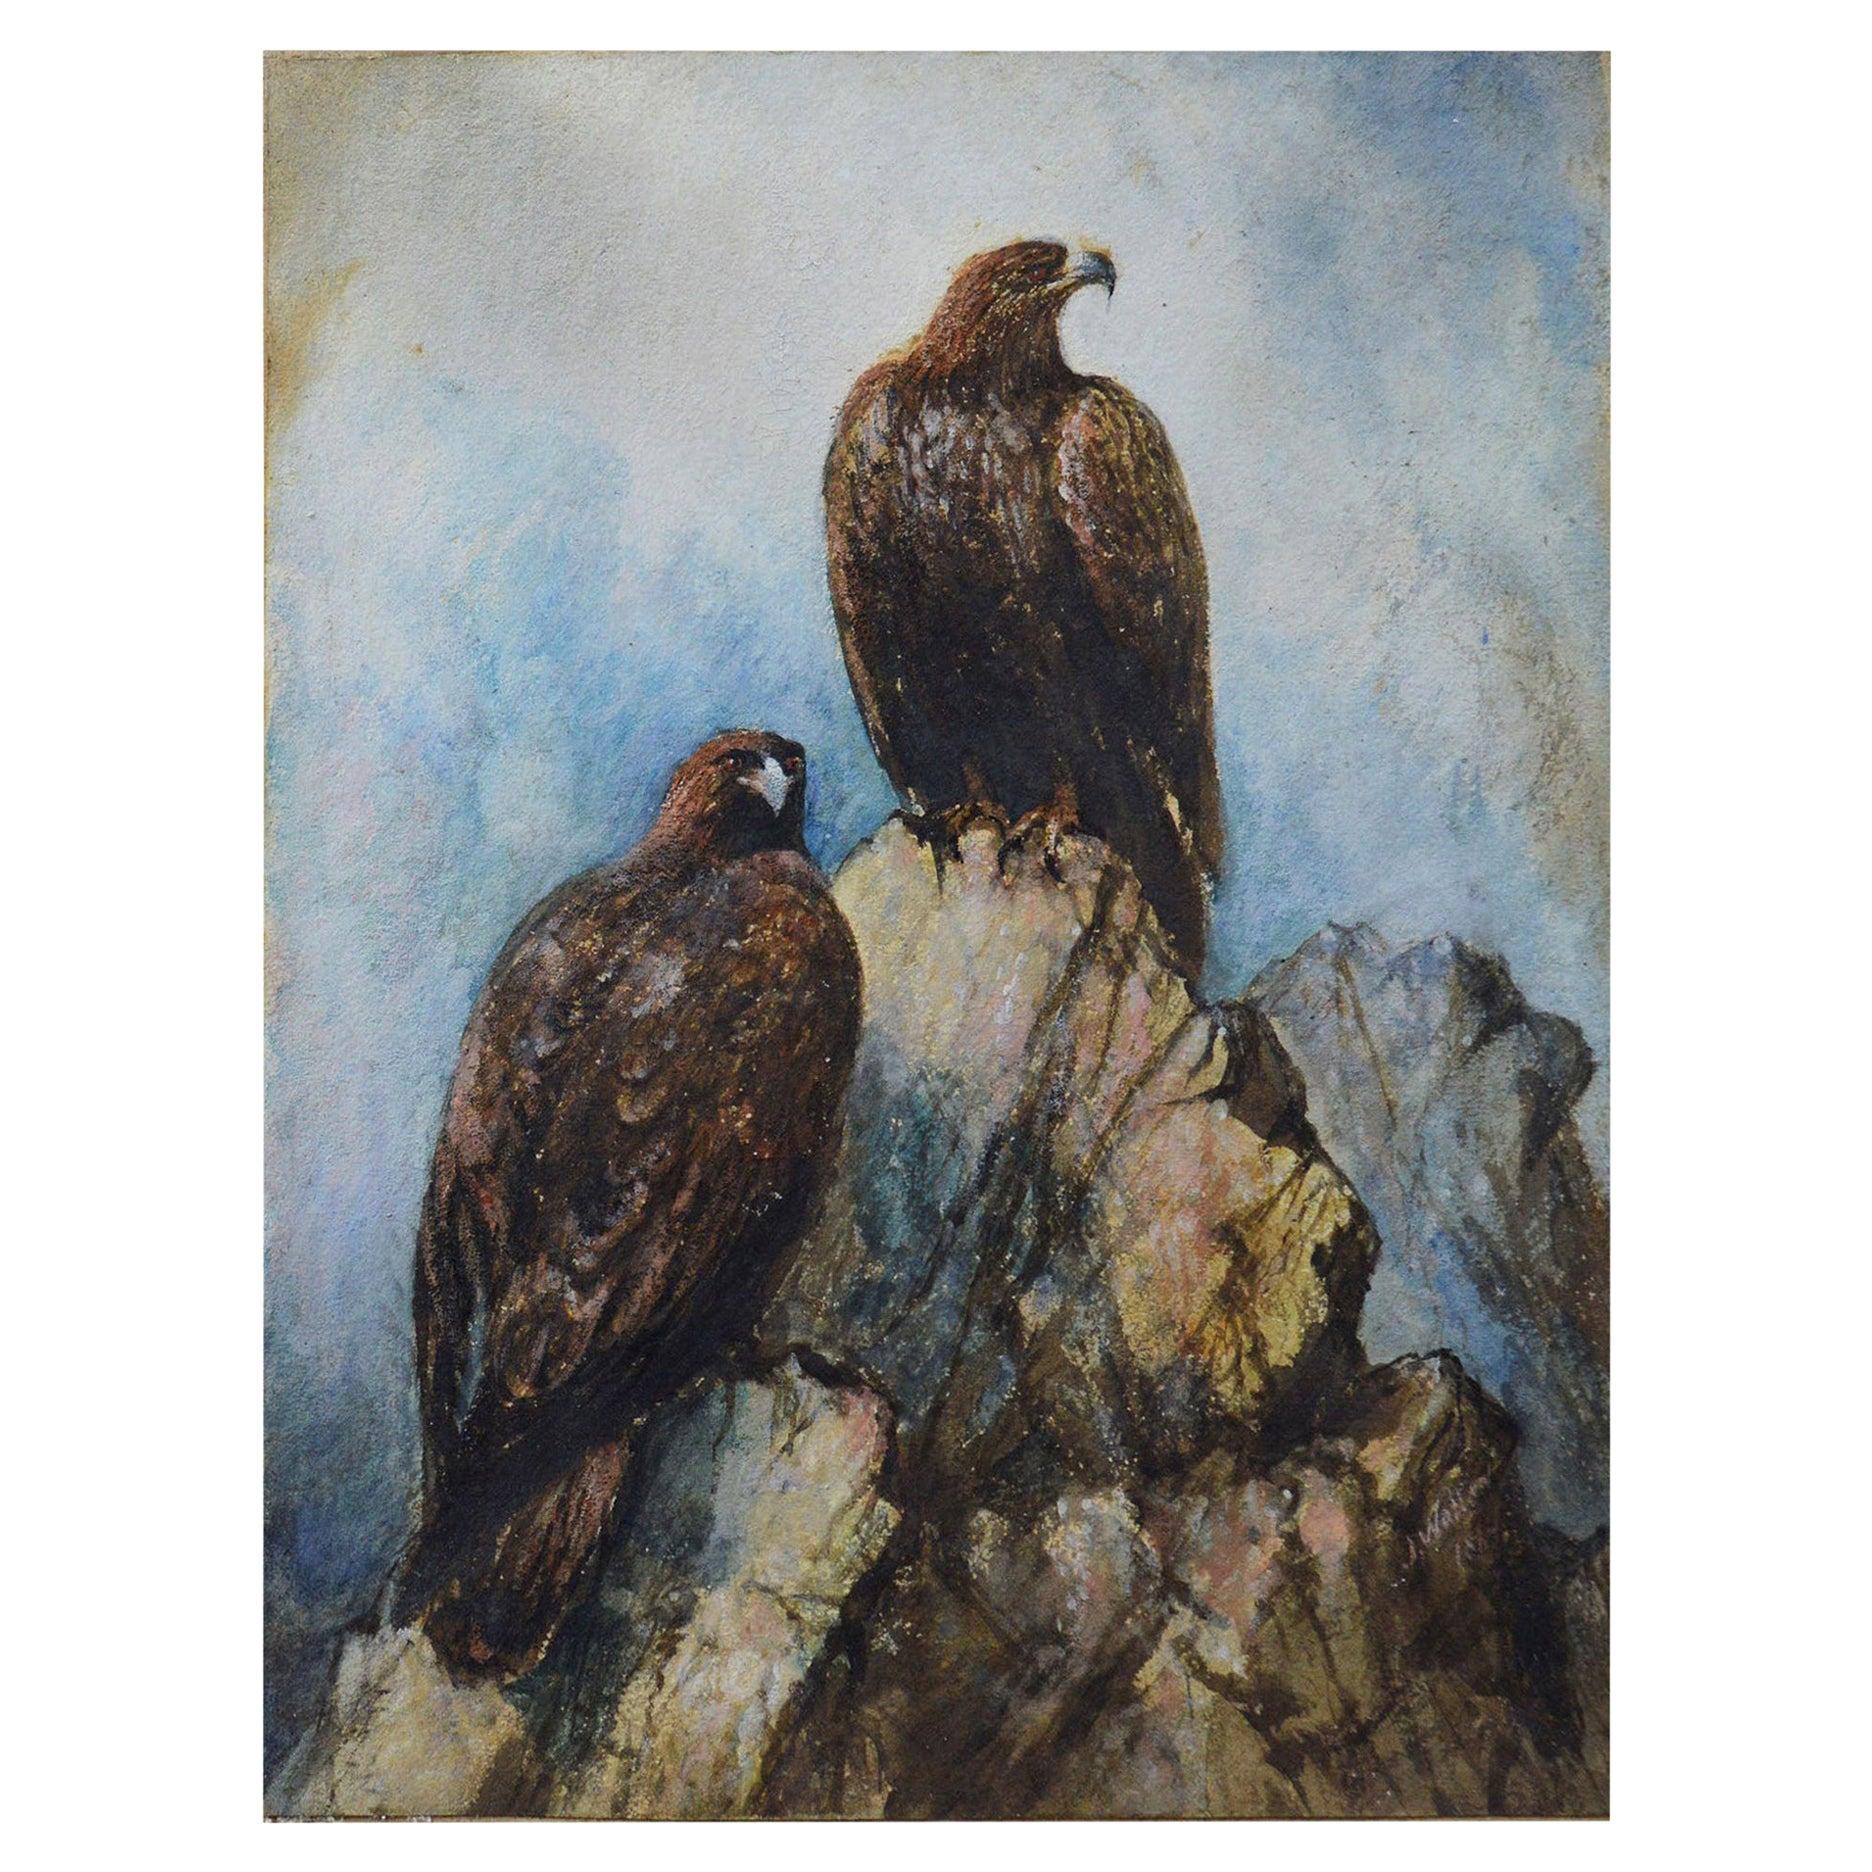 Antique Watercolor of Golden Eagles, 19th Century